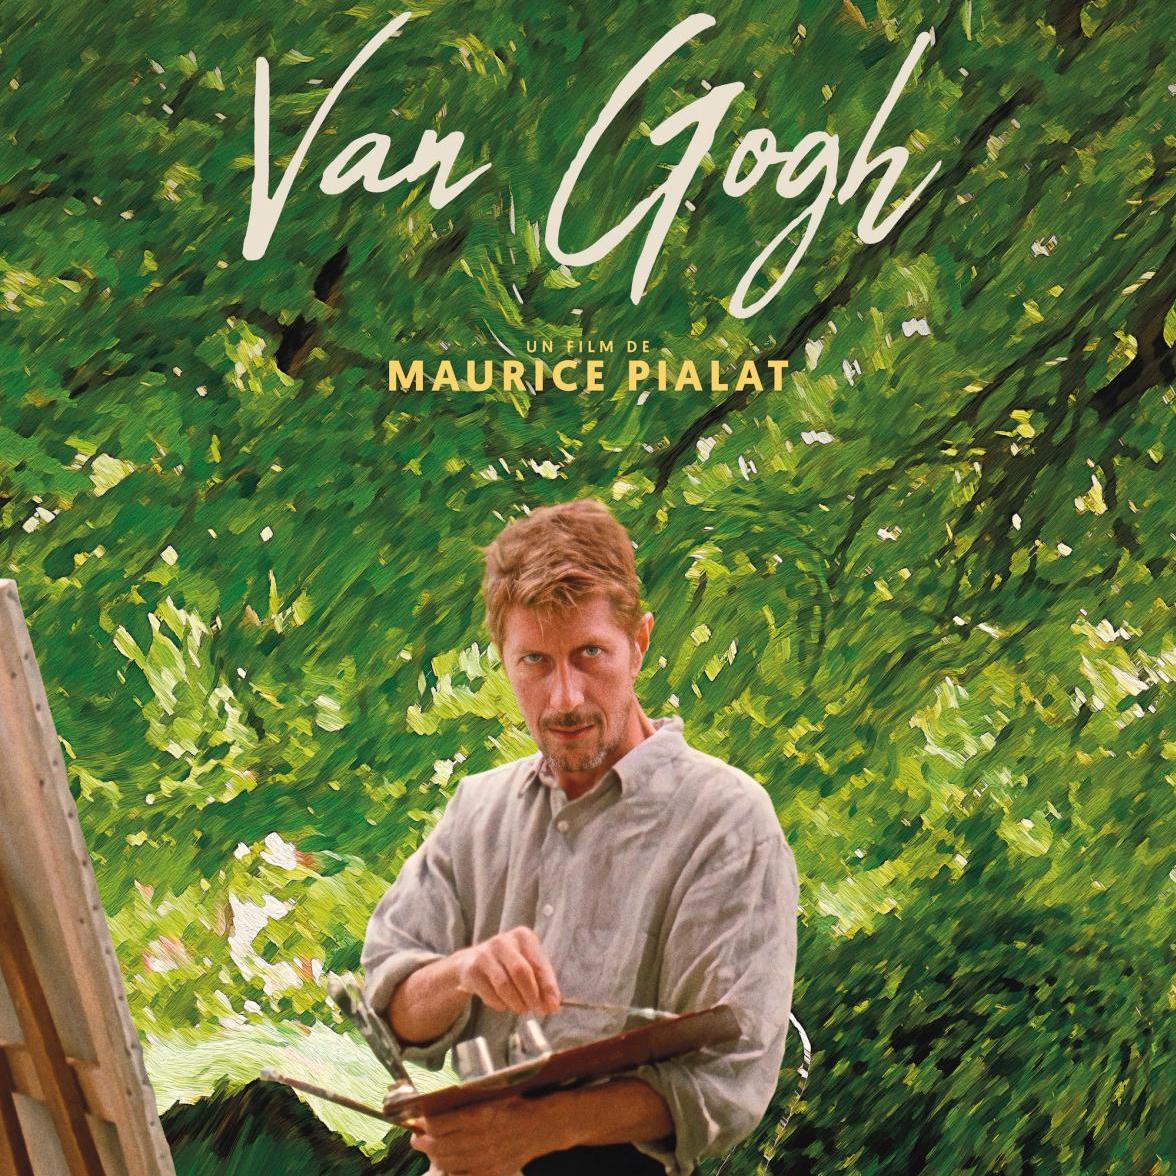 Cinéma : revoir le Van Gogh de Pialat